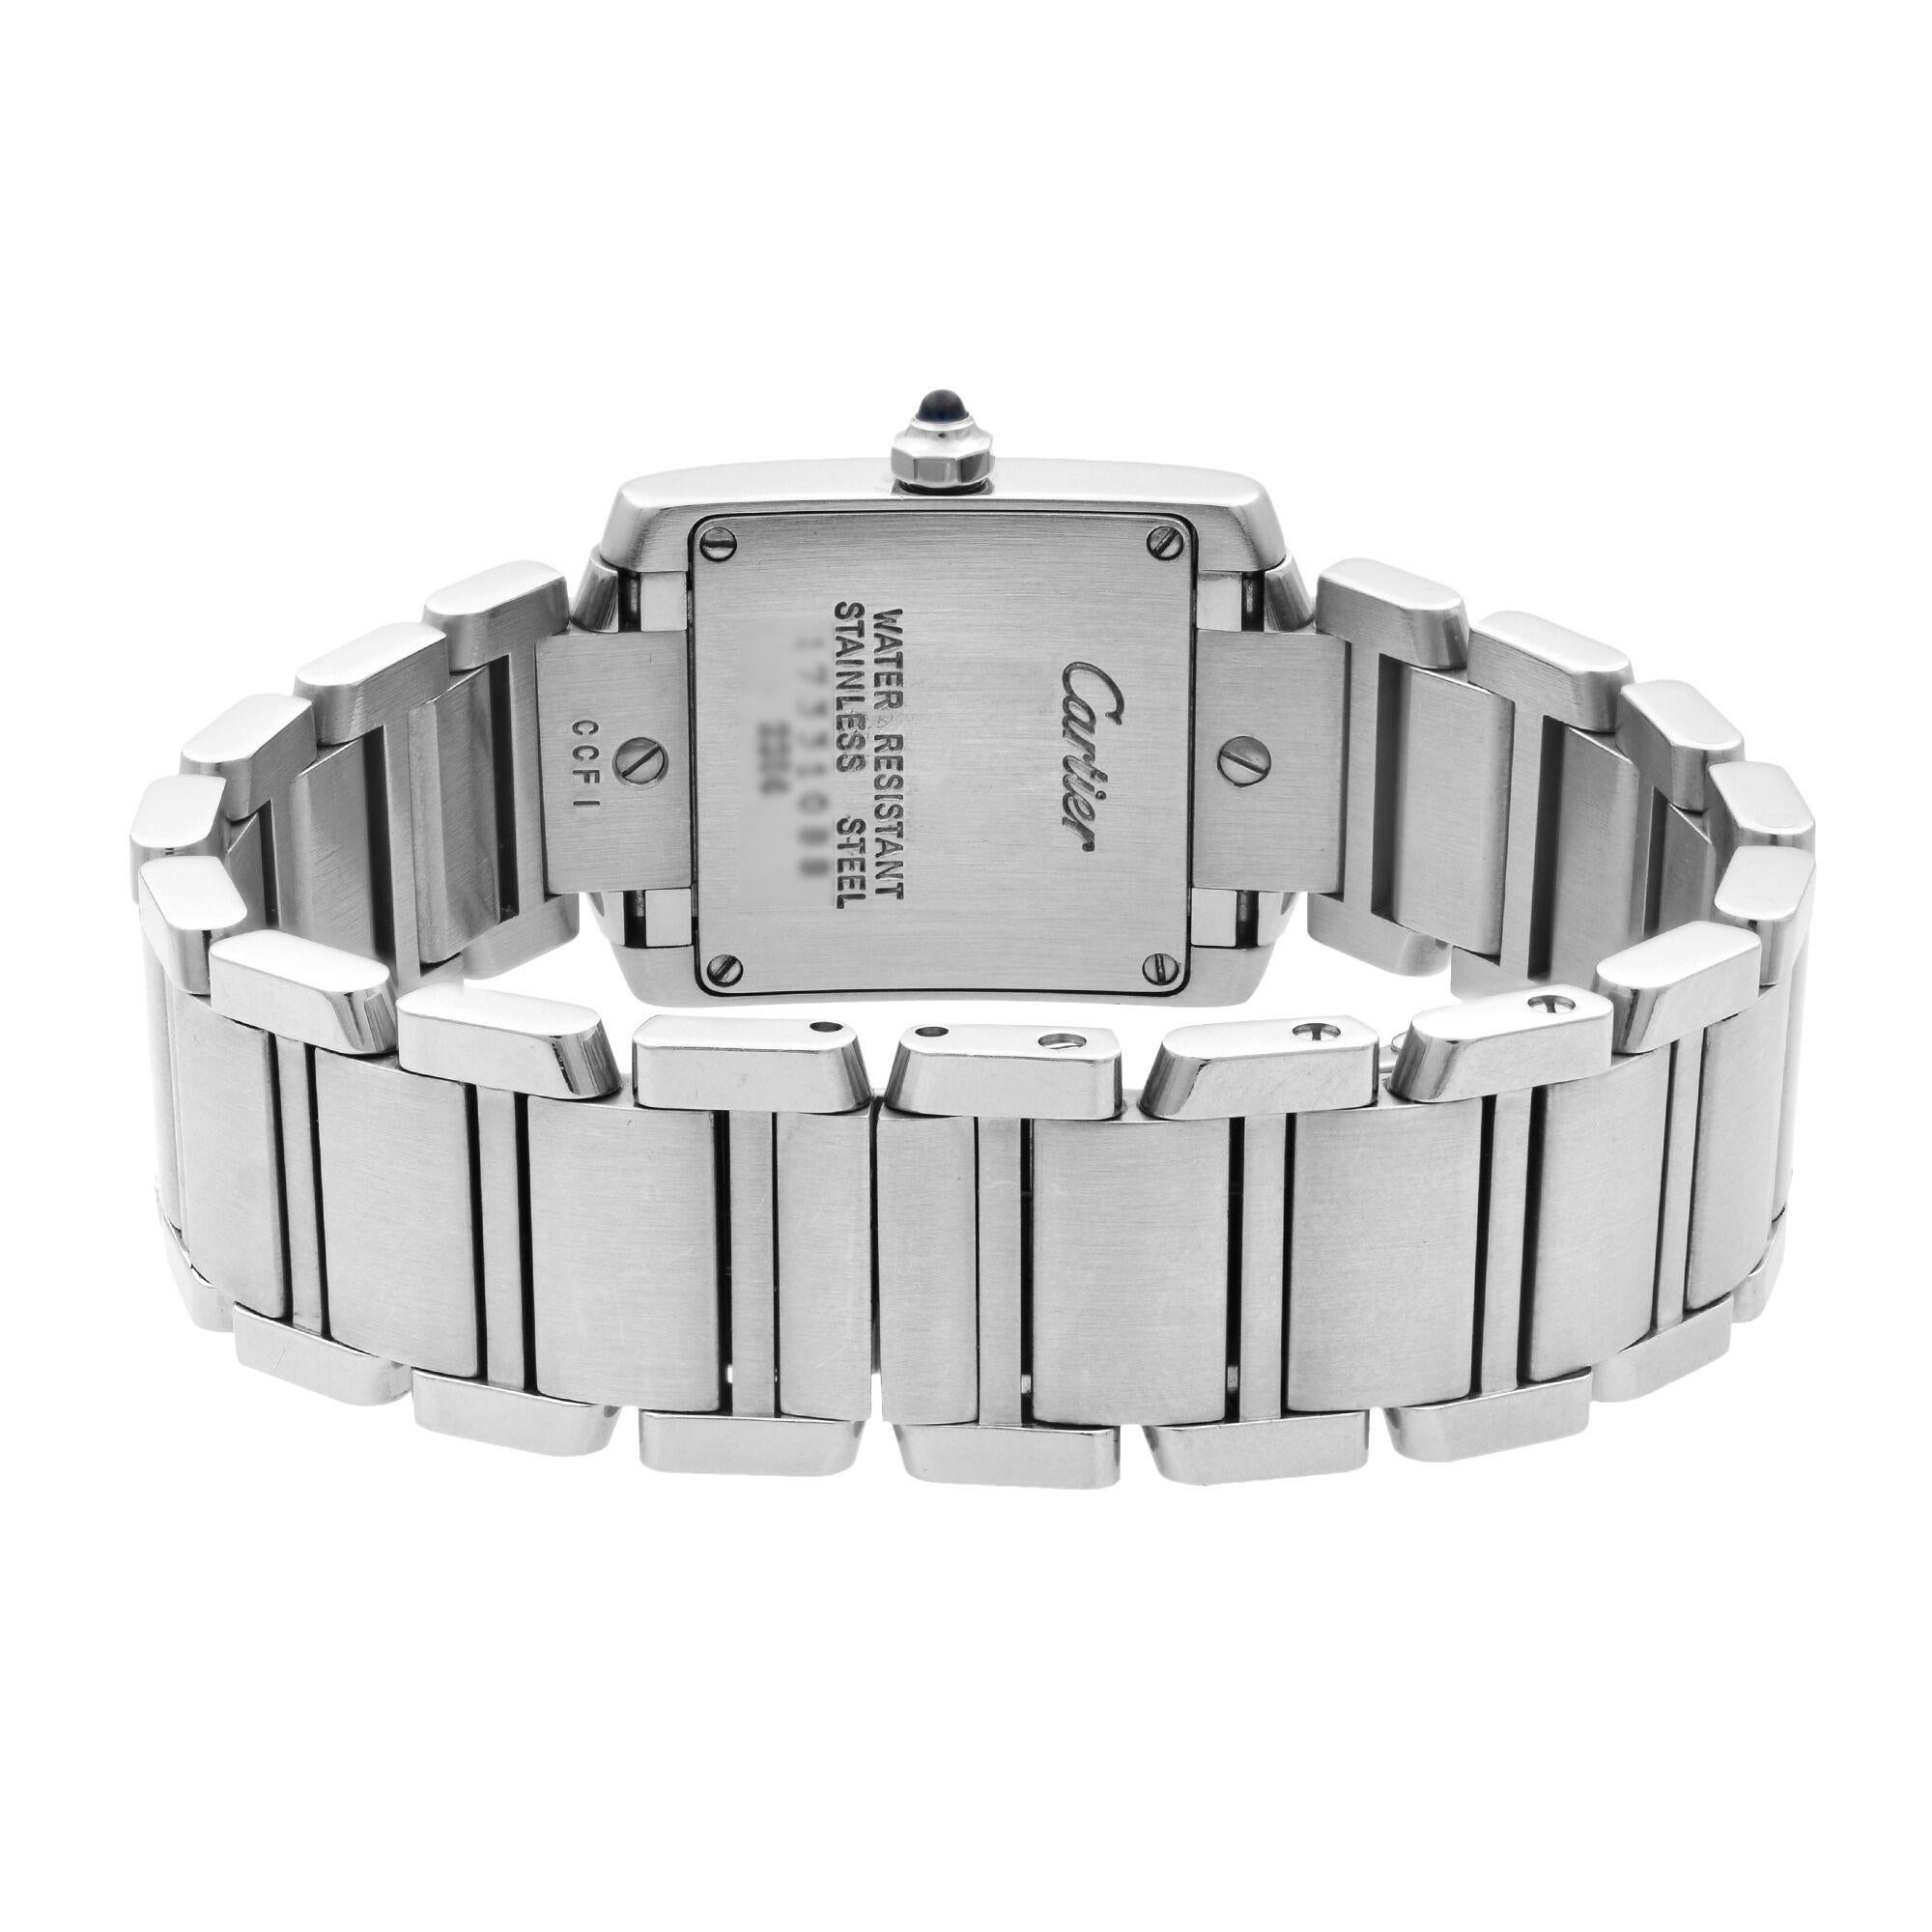 Cartier Tank Francaise Small Steel White Dial Quartz Women's Watch W51008Q3 2